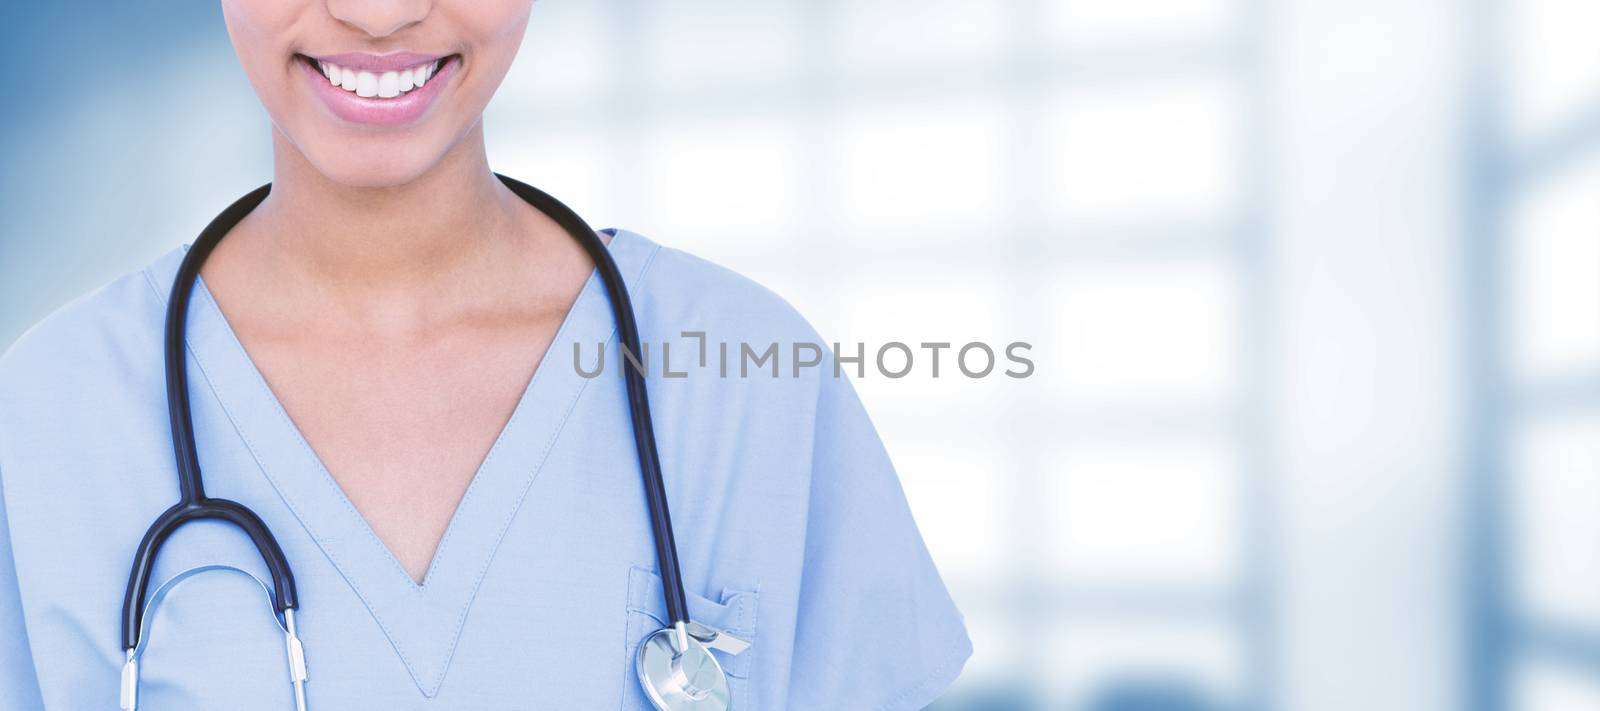 Portrait of smiling female surgeon against dental equipment